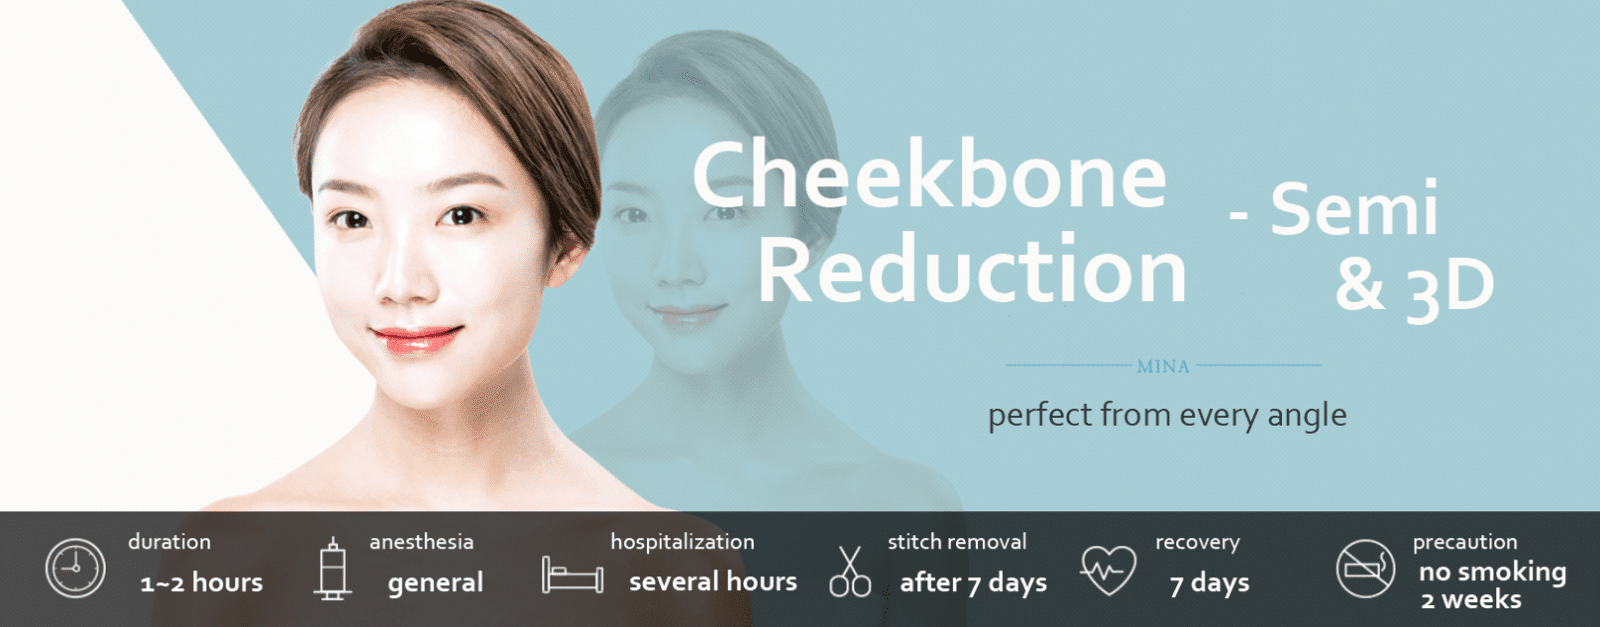 Cheekbone Reduction Semi 3D